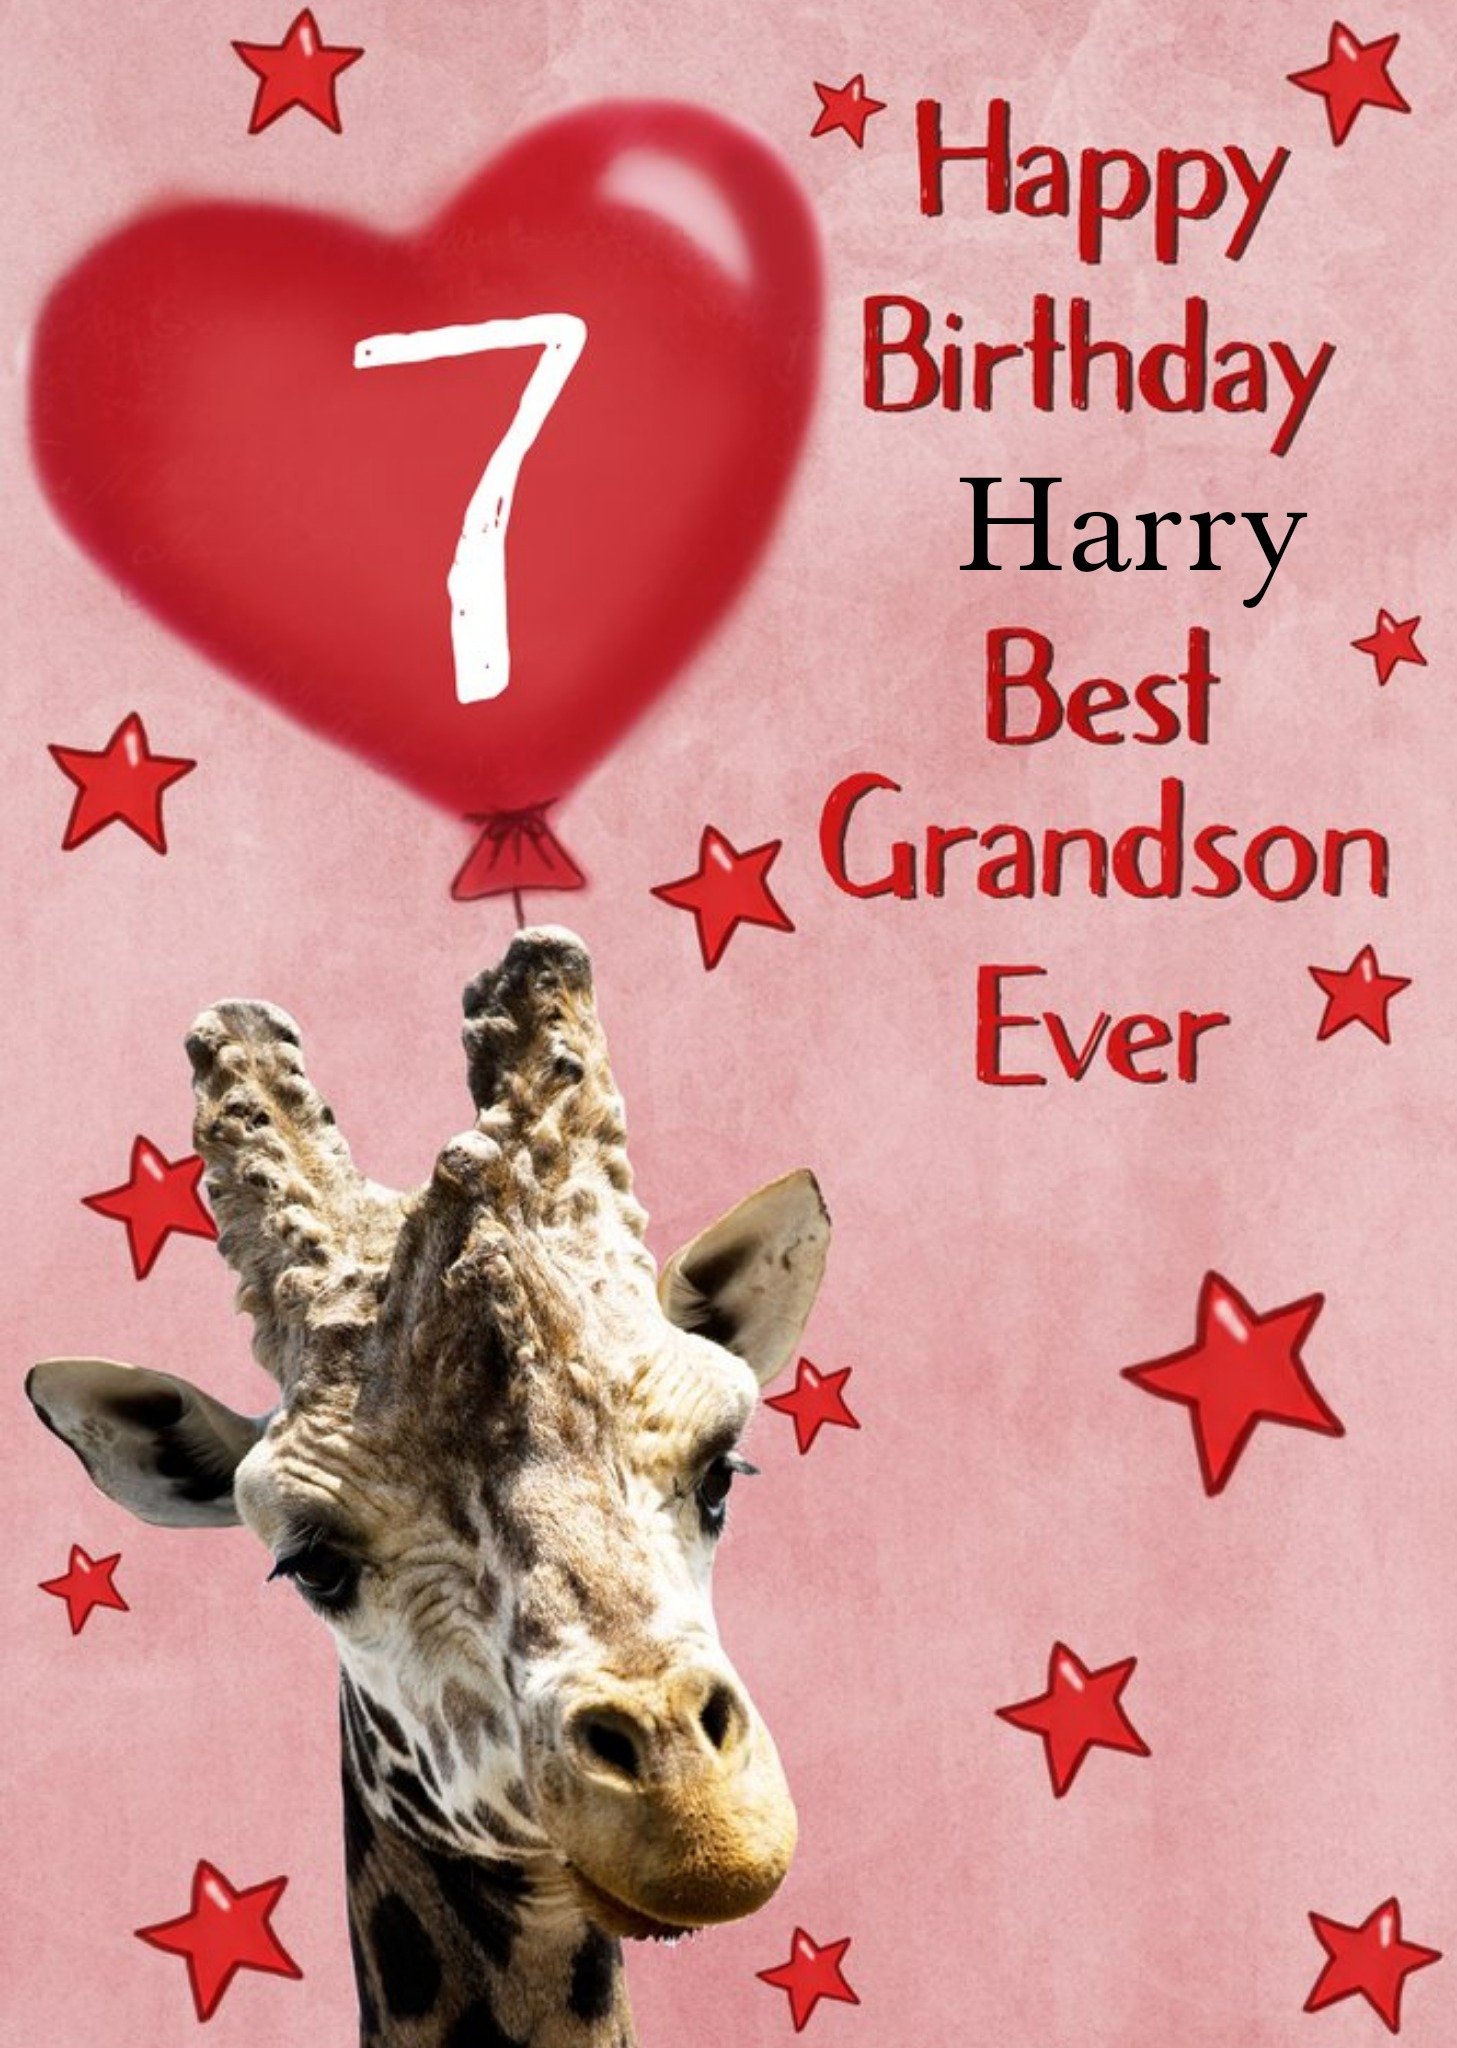 Moonpig Photo Of Giraffe With Birthday Balloon Grandson 7th Birthday Card Ecard